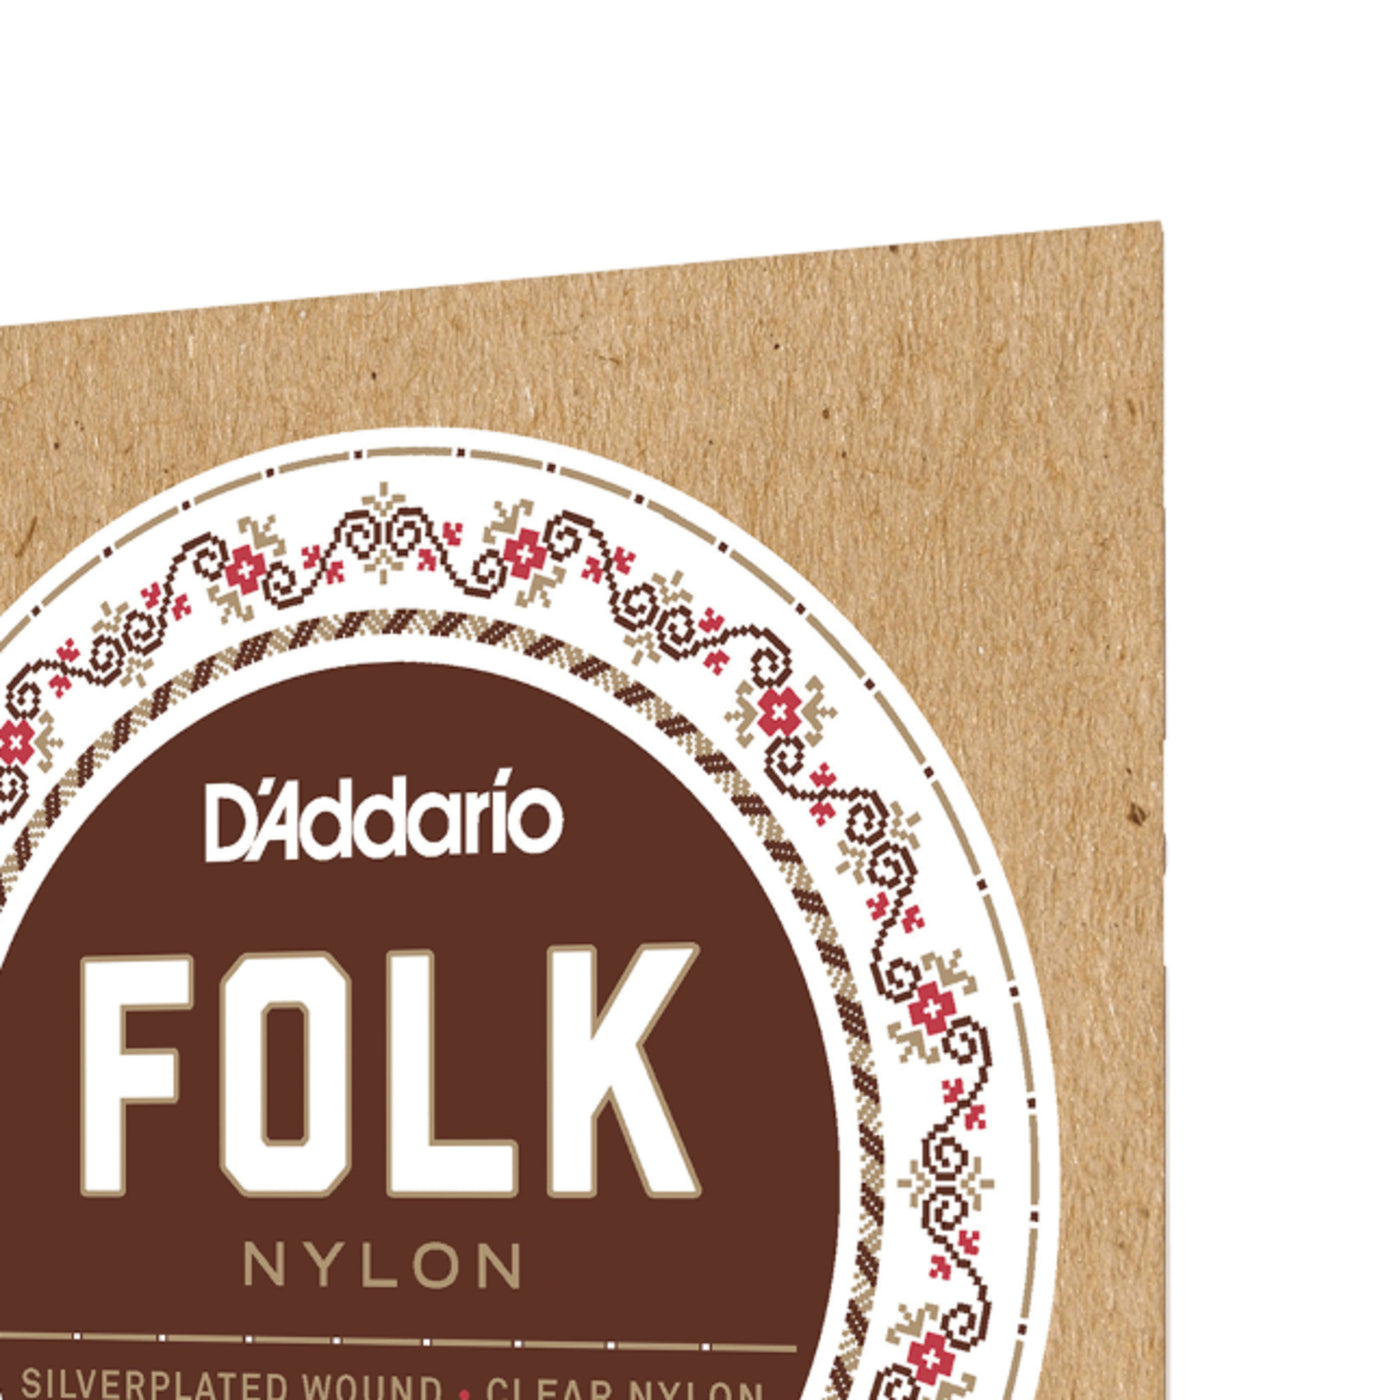 D'Addario Folk Nylon Guitar Strings, Ball End, Silver Wound/Clear Nylon Trebles (EJ32C)